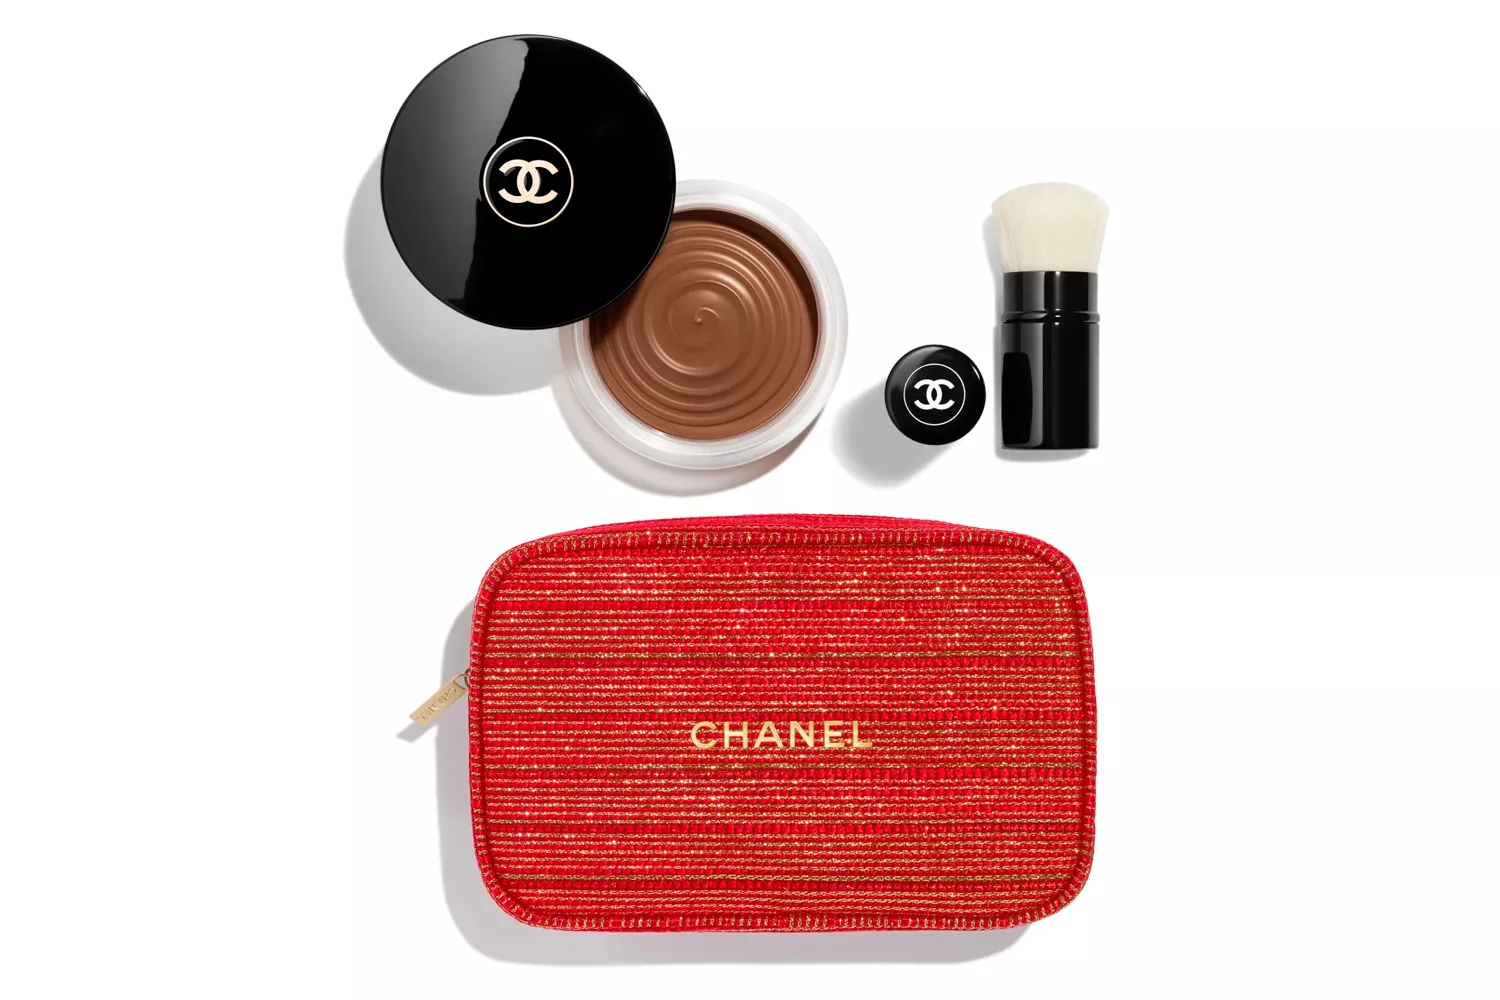 Chanel Glow Forth Bronzer Set